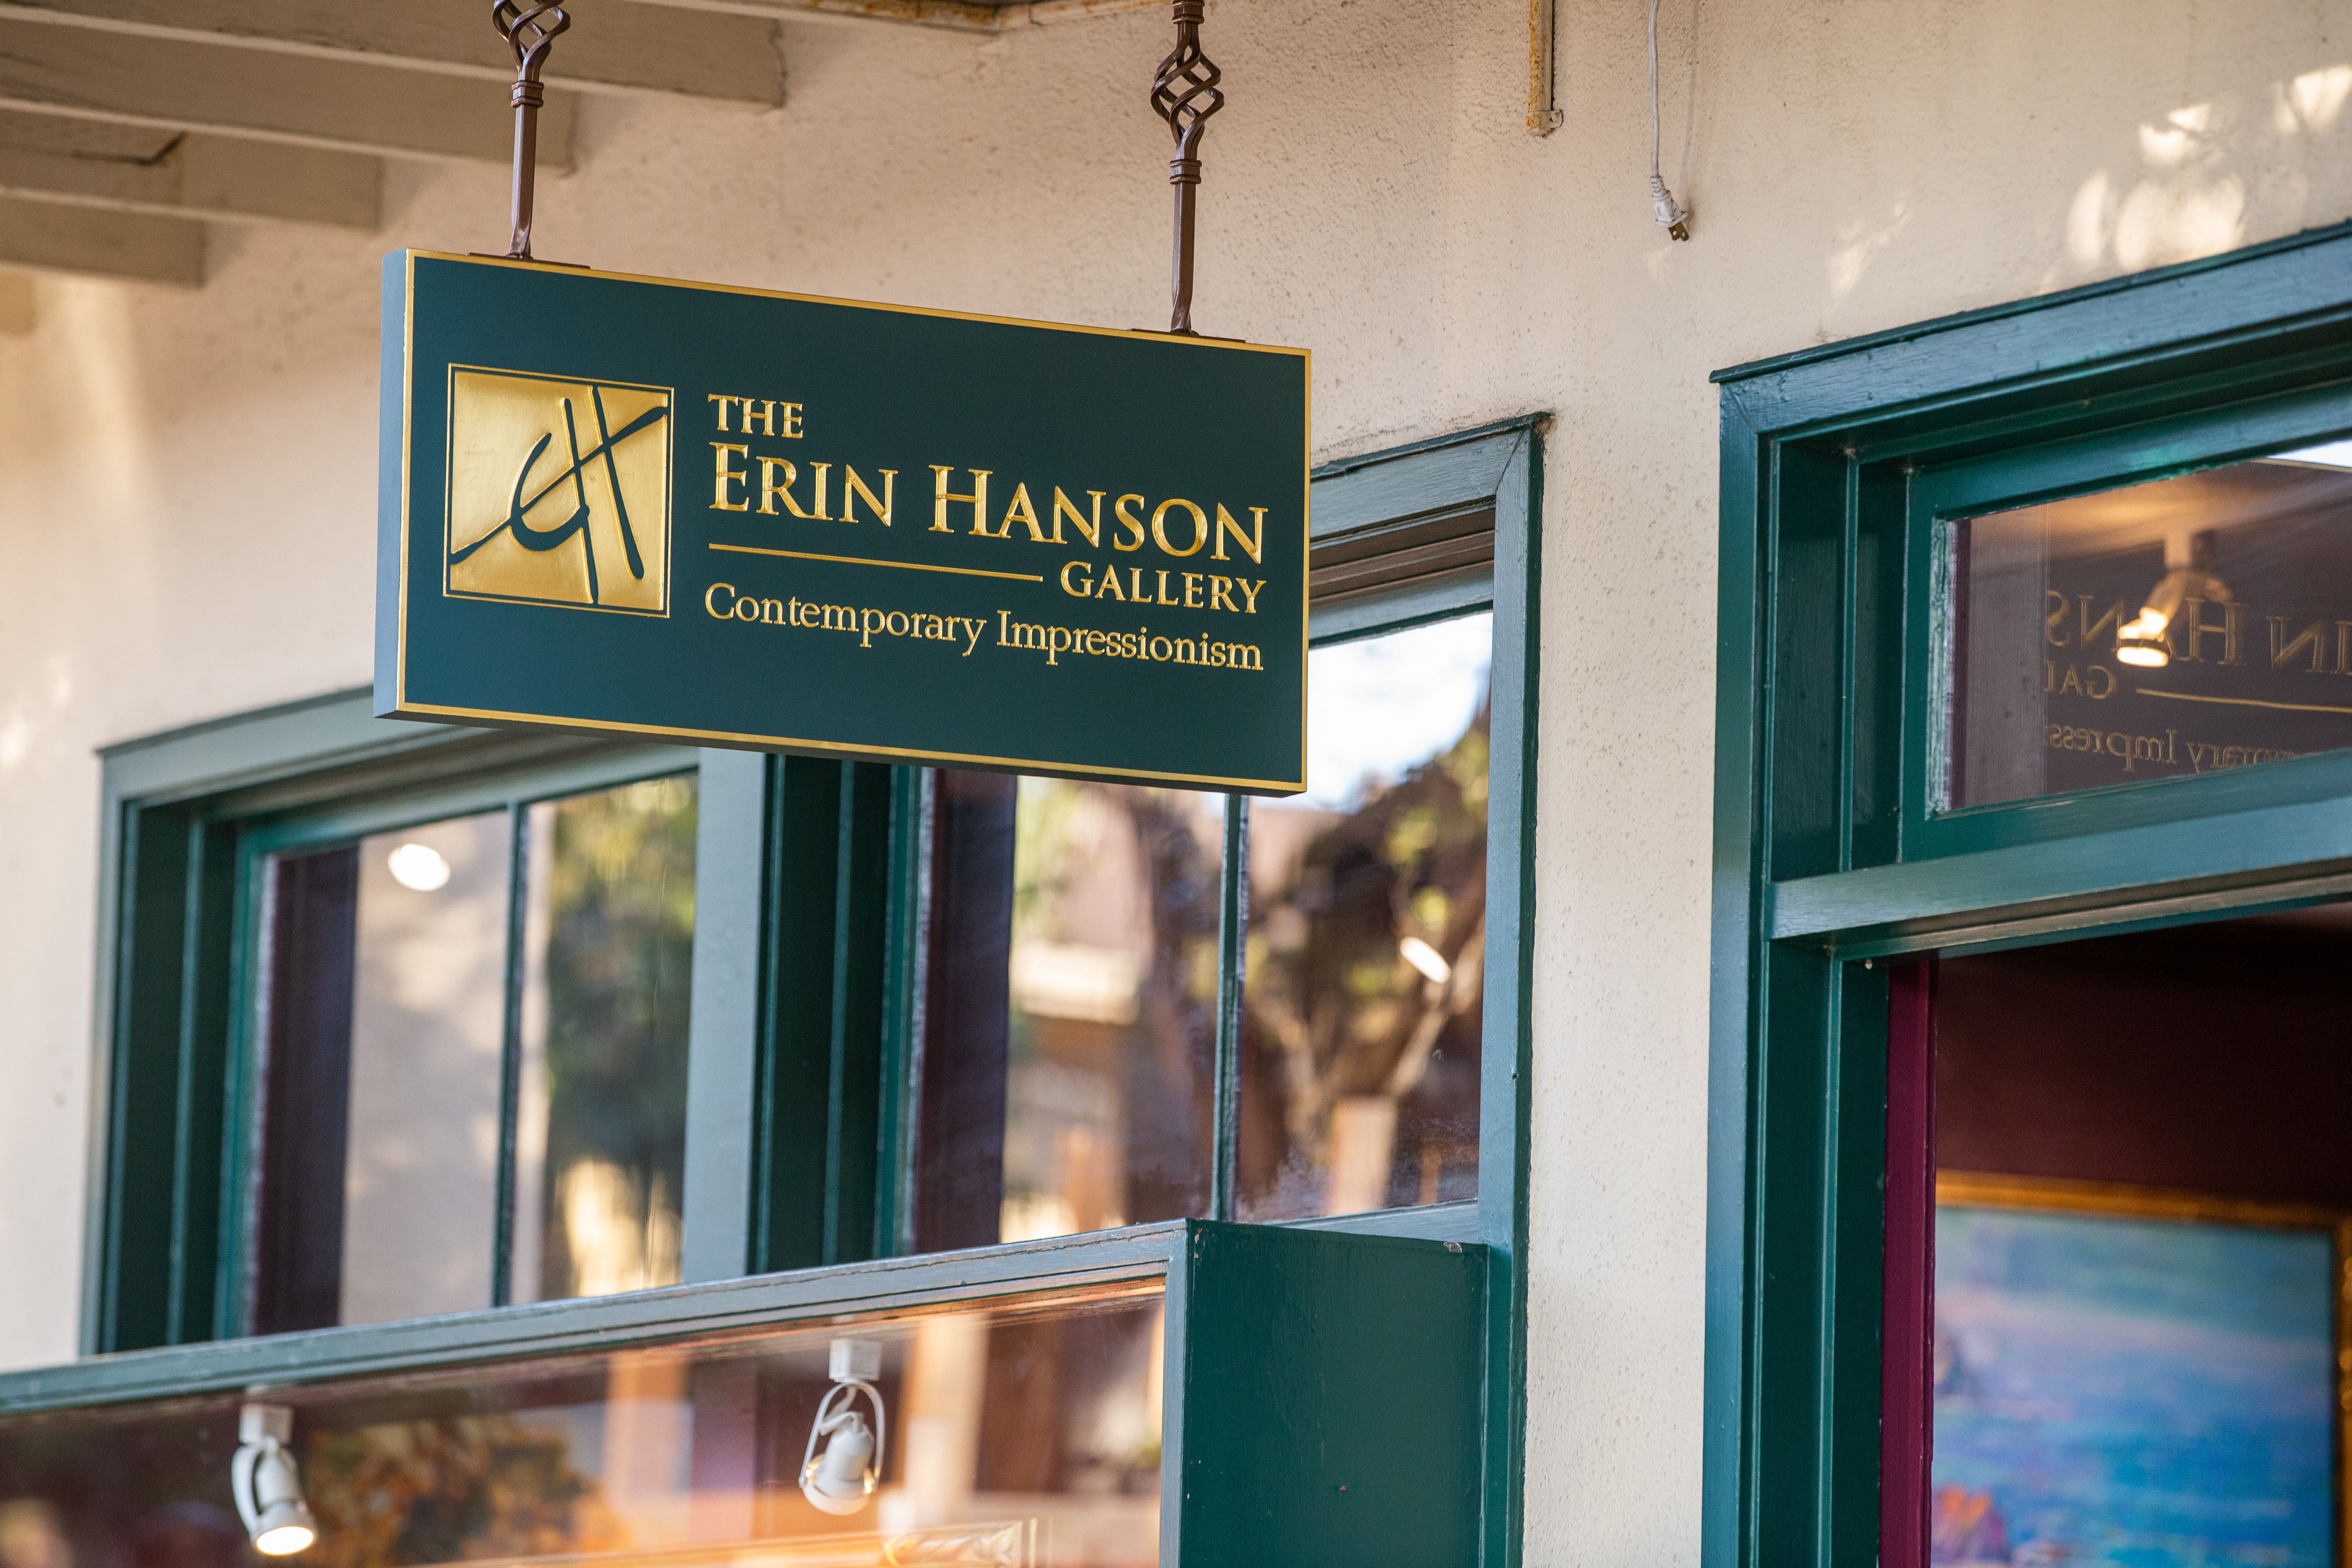 The Erin Hanson Gallery of Carmel